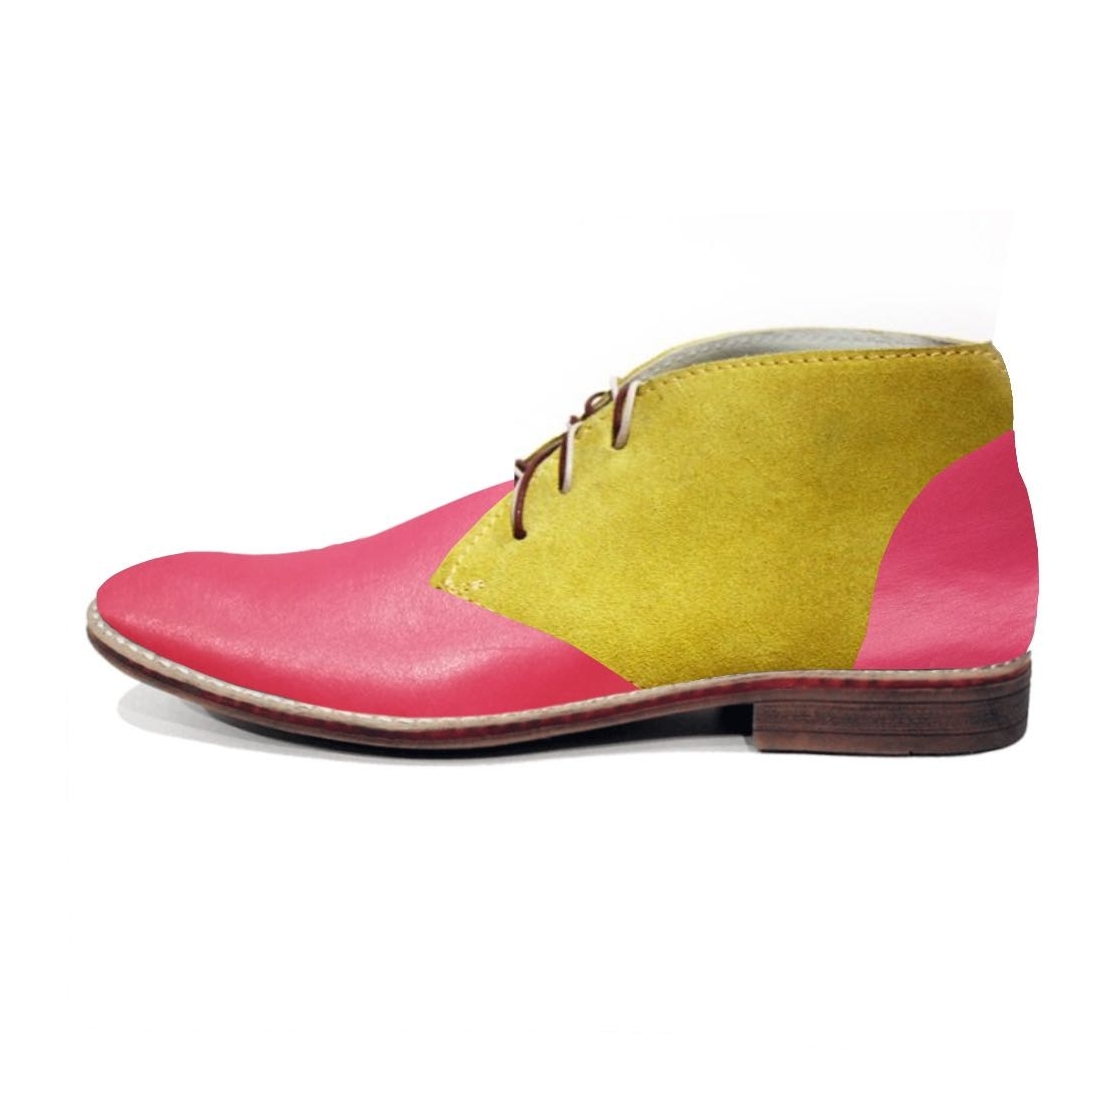 Modello Primavello - чукка мужские - Handmade Colorful Italian Leather Shoes